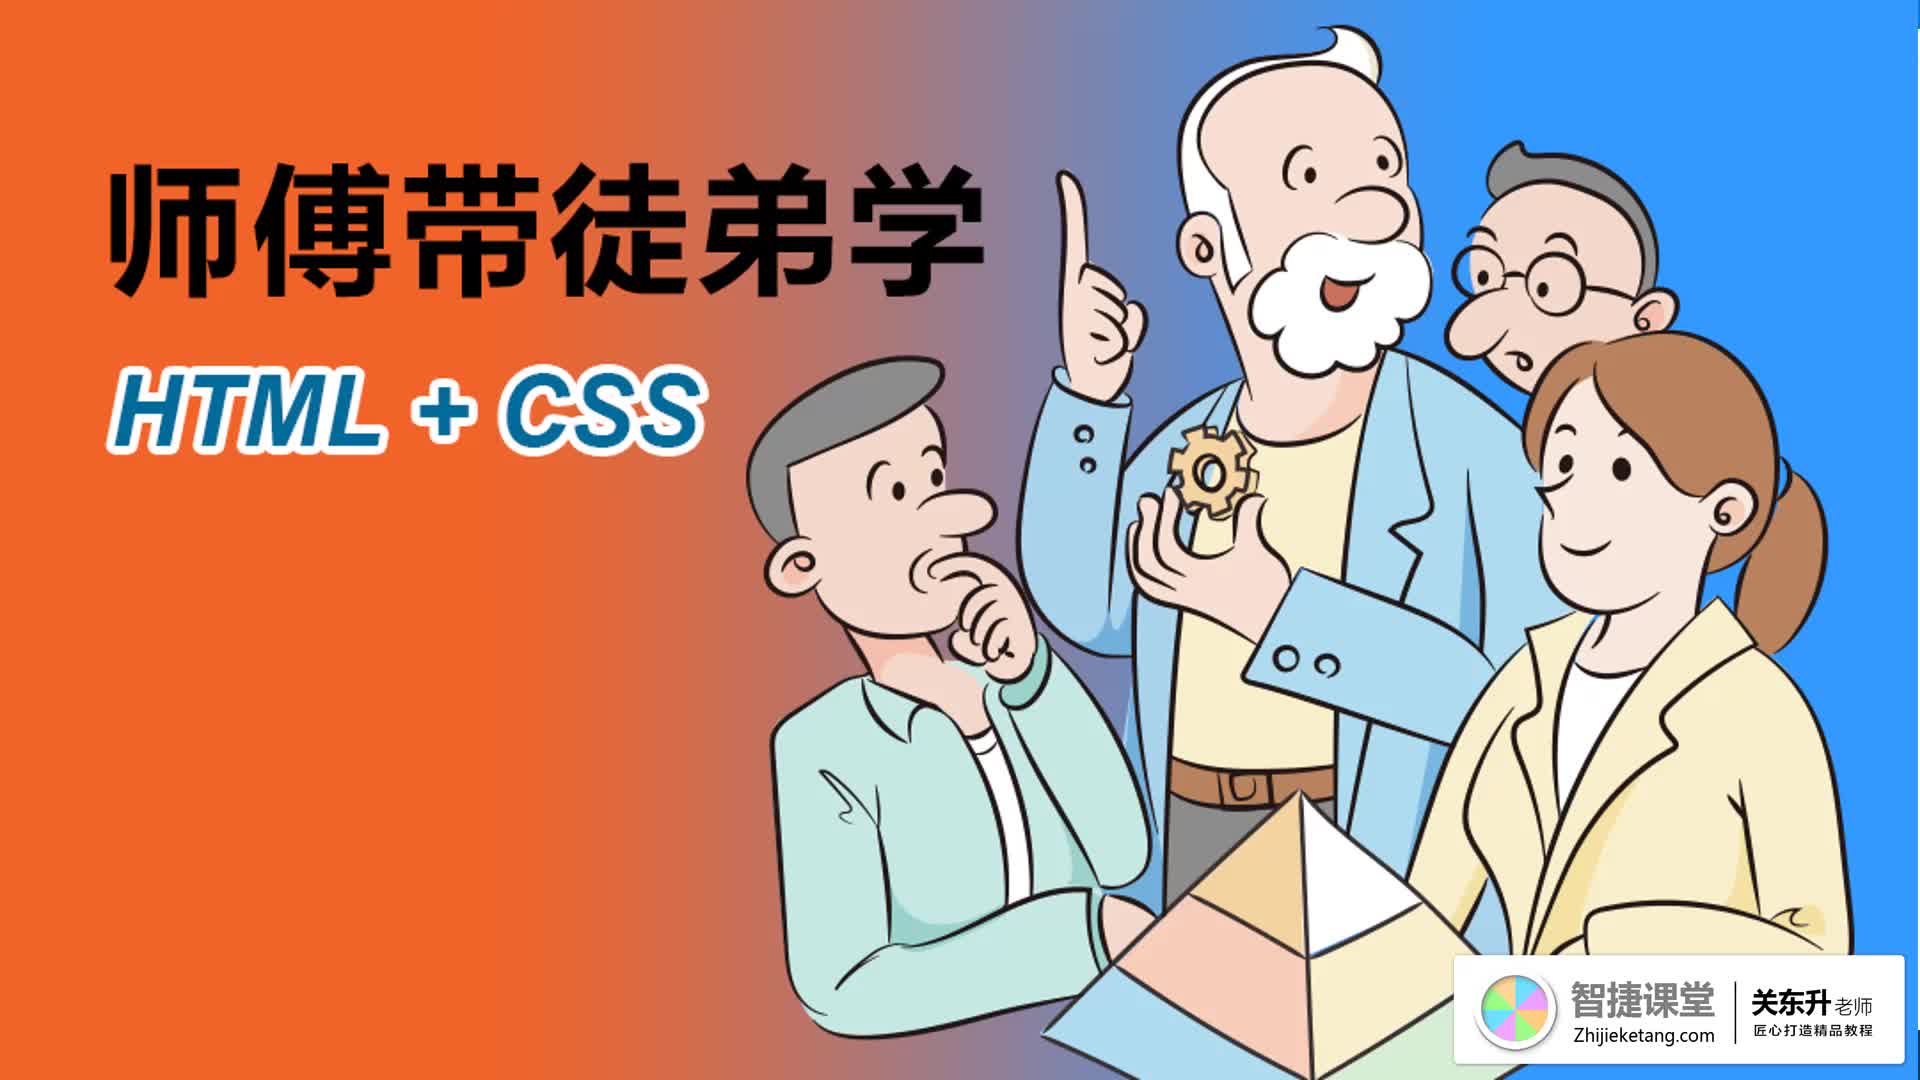 师傅带徒弟学HTML+CSS